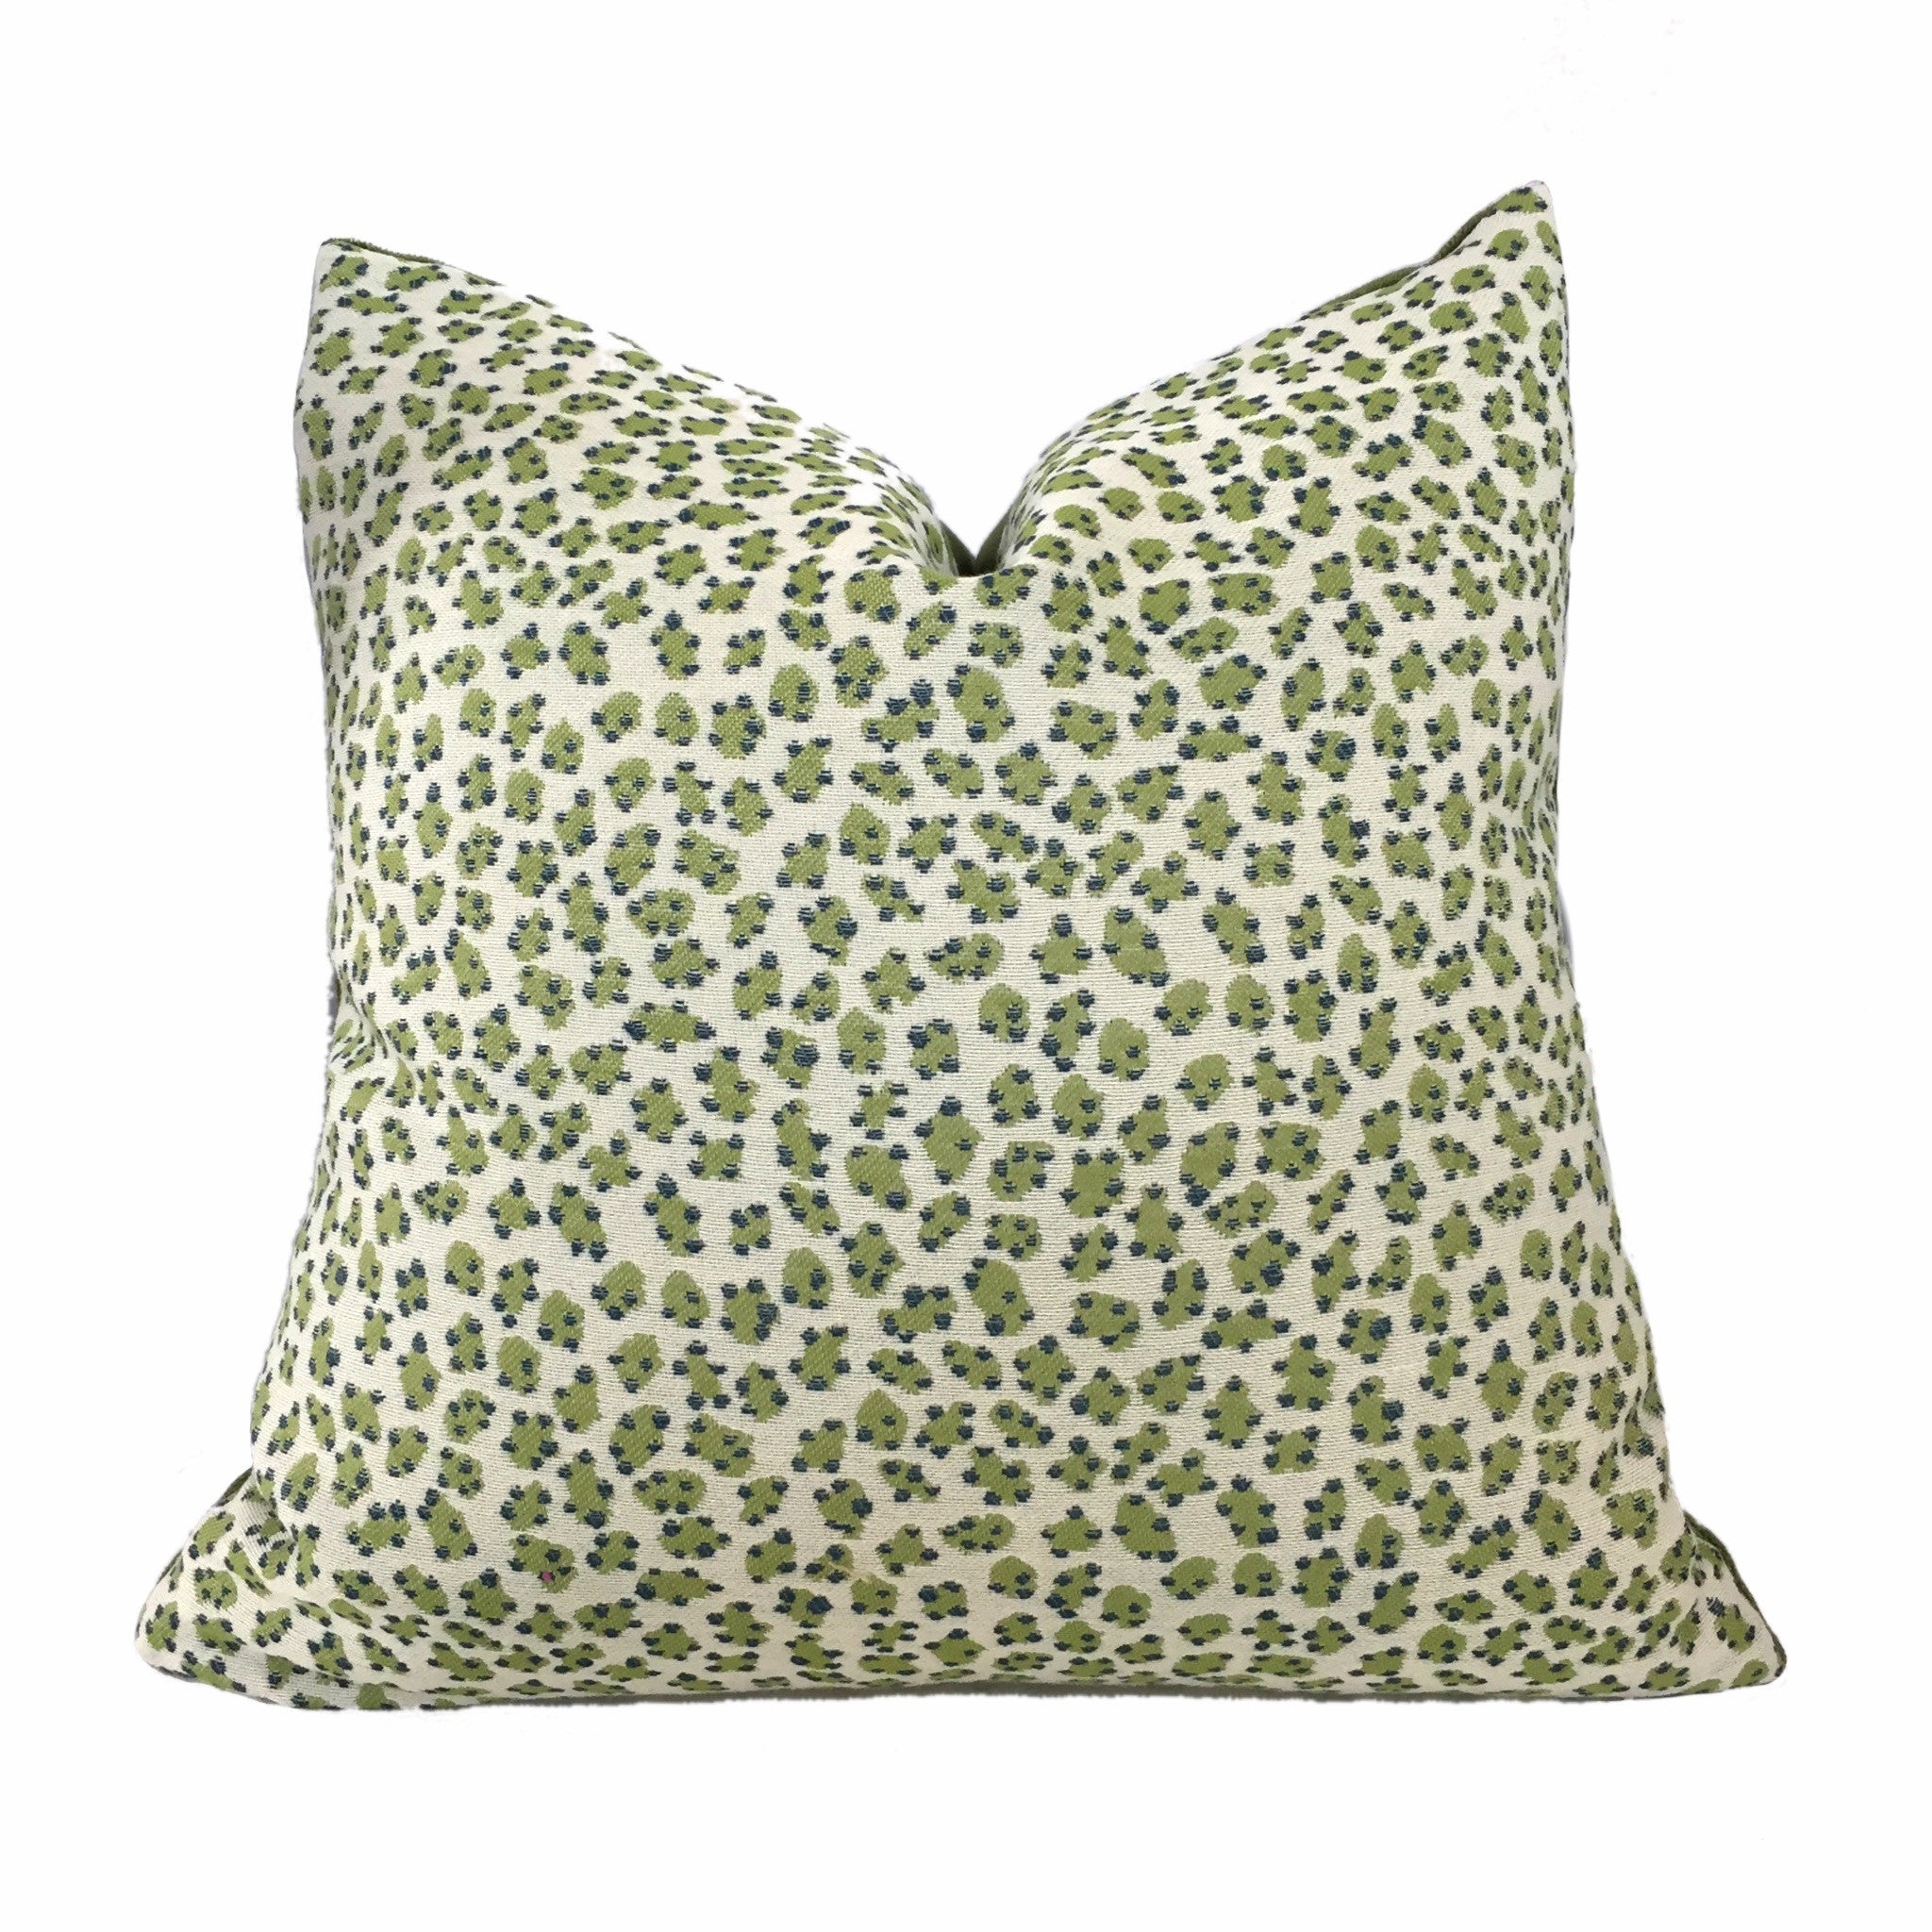 Tilton Fenwick Haute Cactus Green Leopard Cheetah Animal Spot Pillow Cover